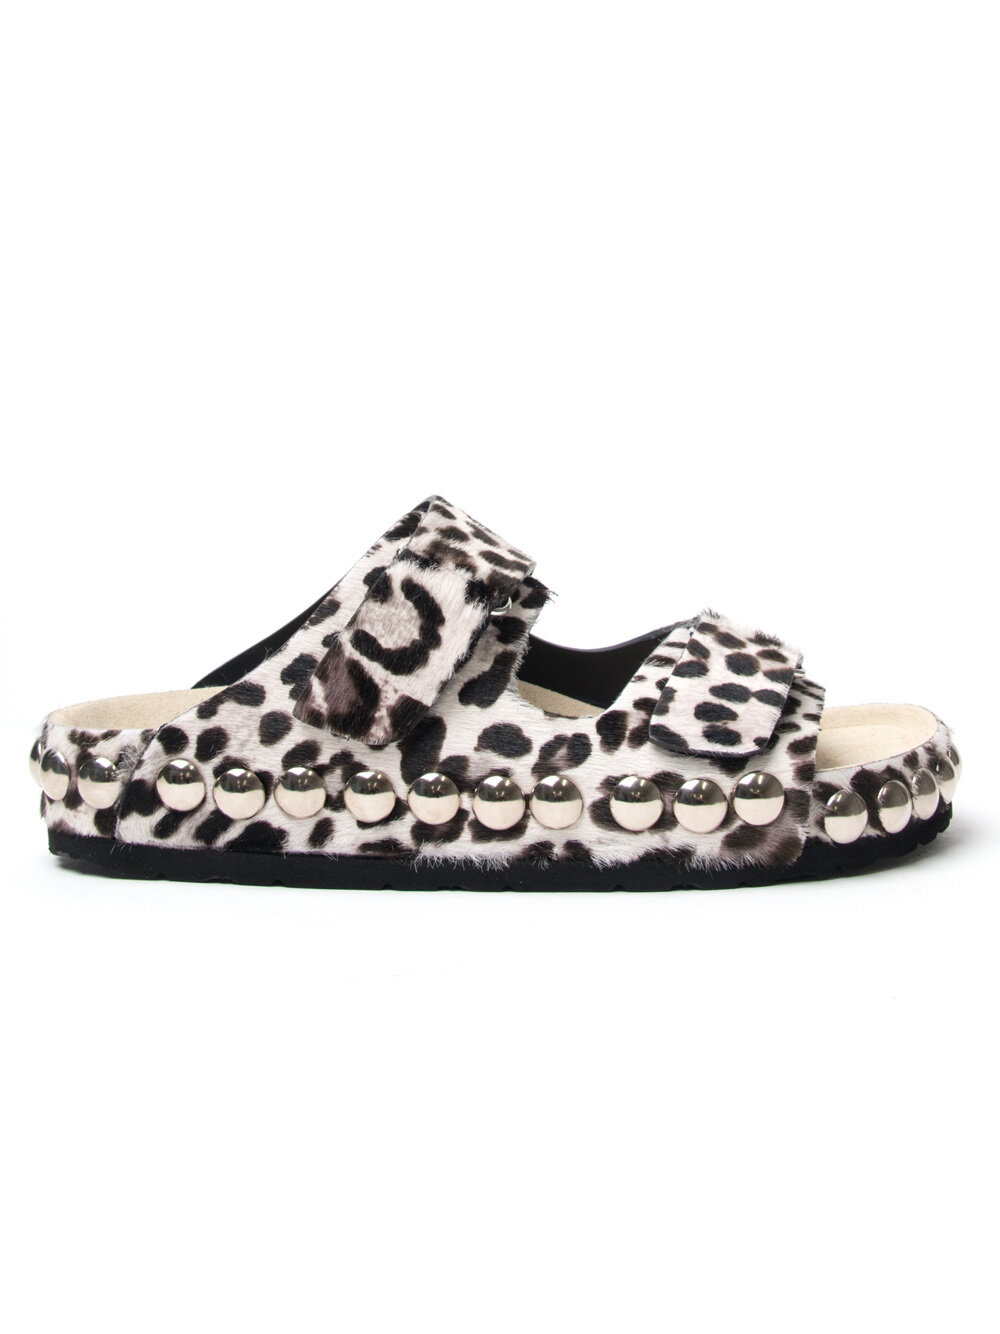 Giambattista Valli Studded Sandals in Leopard Print.jpg